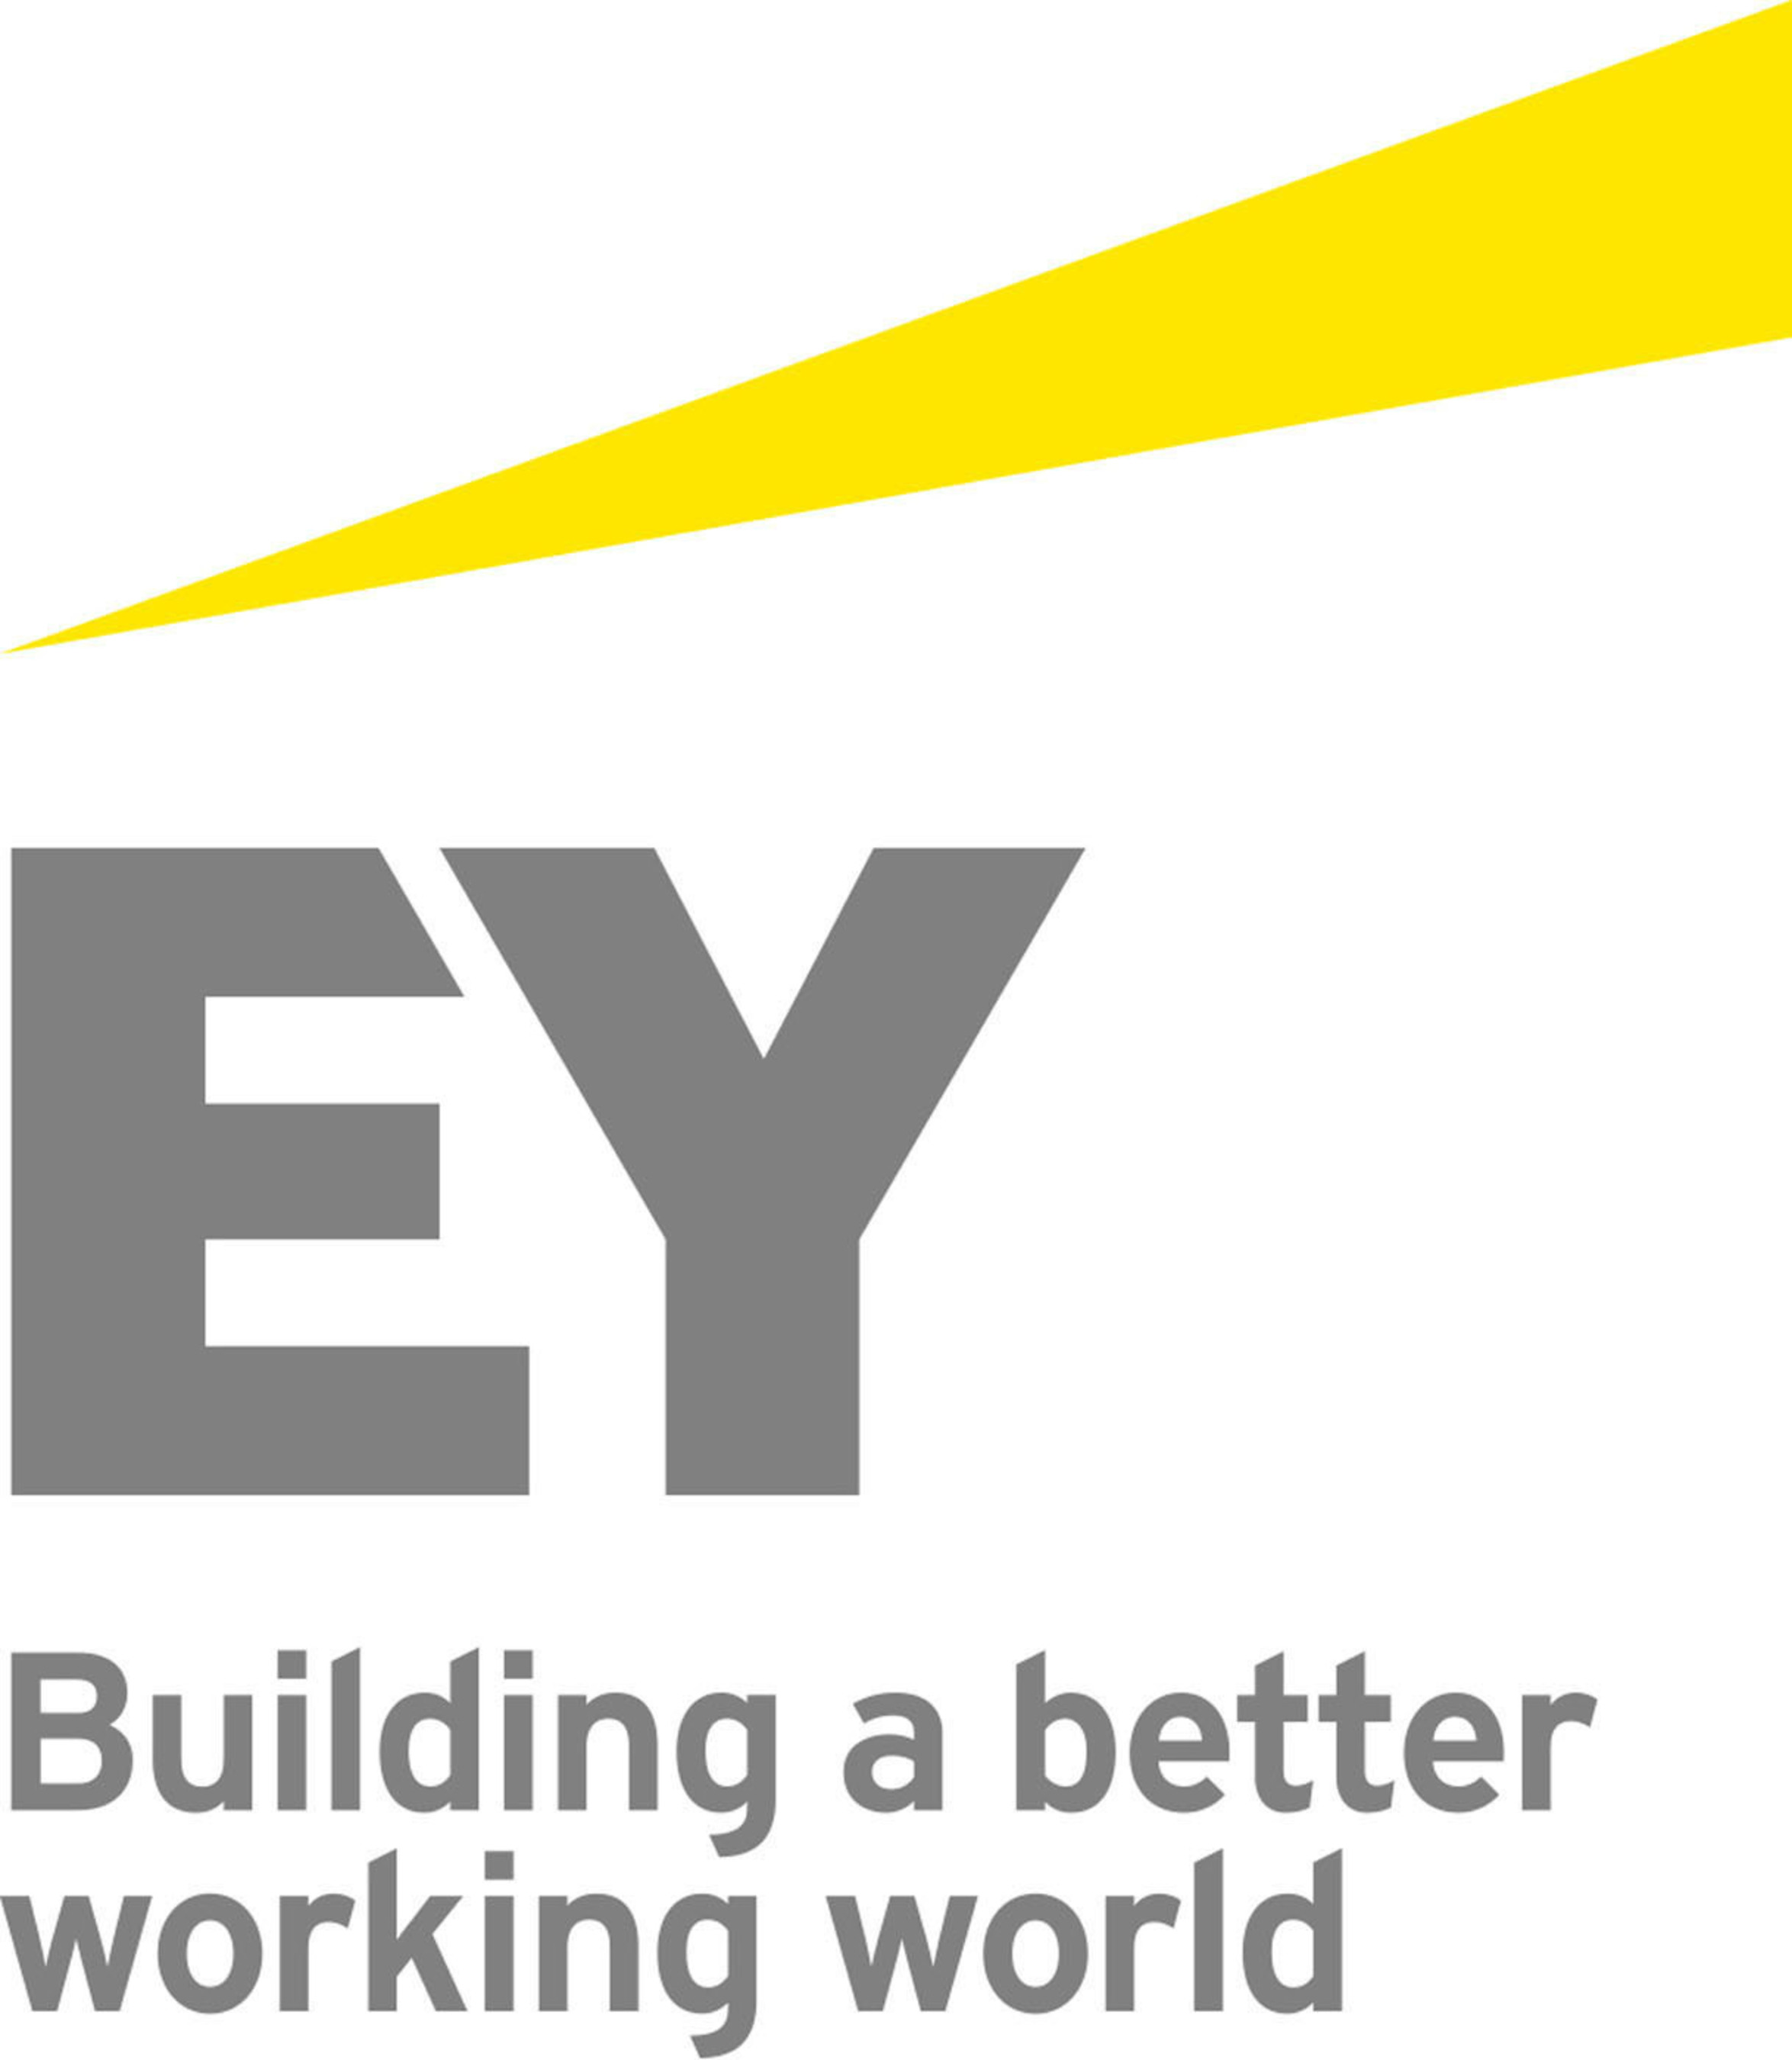 EY Building a better working world logo.